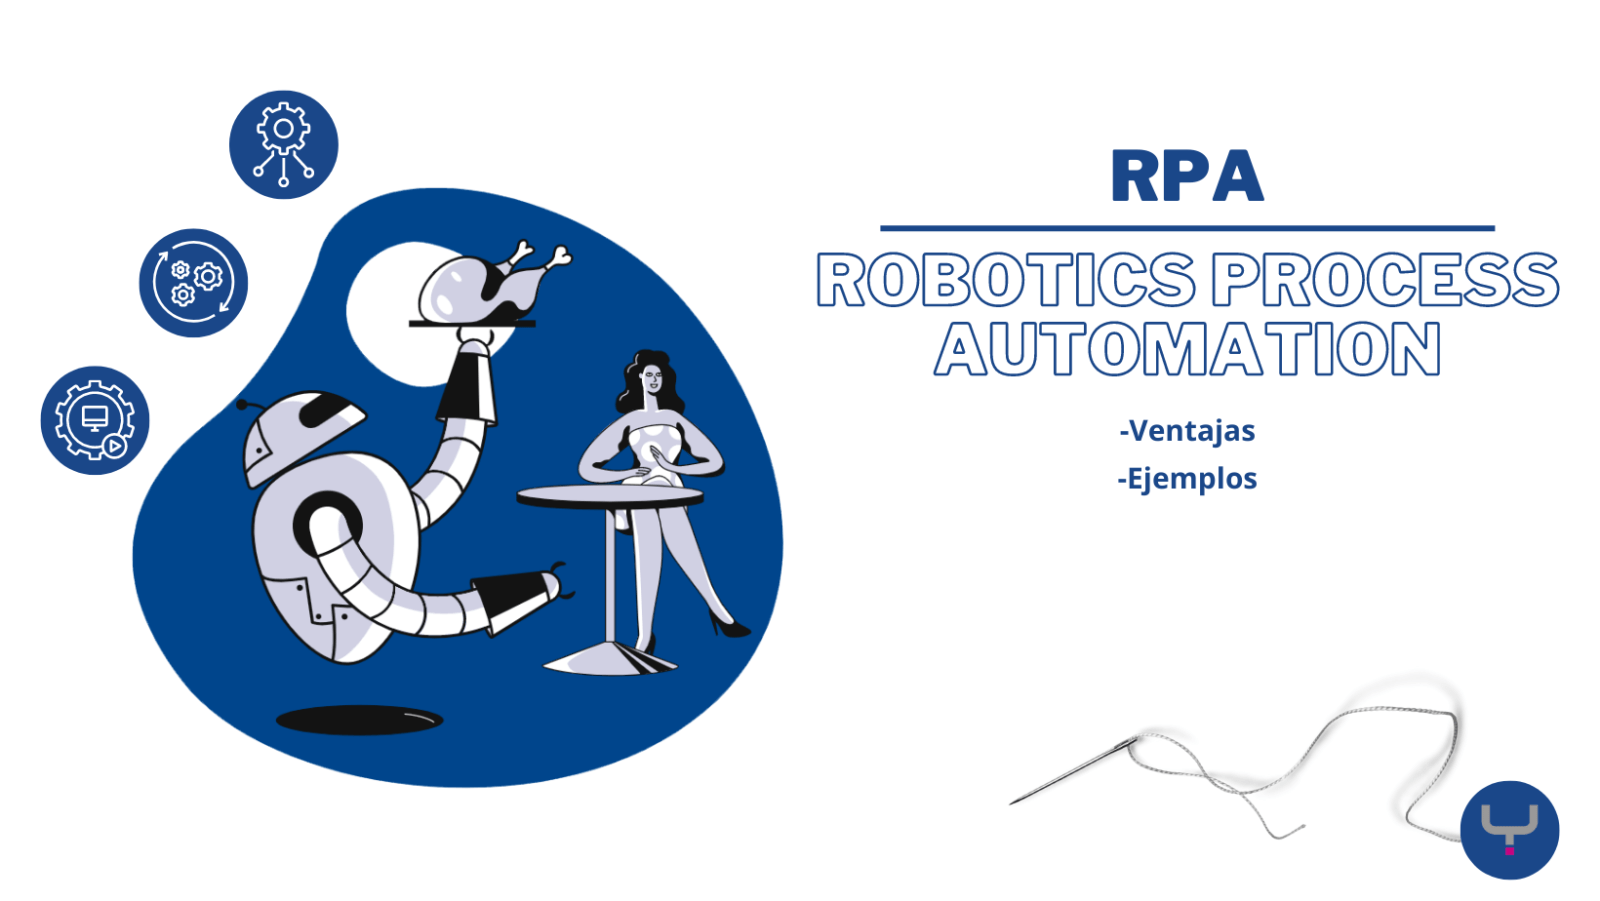 RPA (ROBOTICS PROCESS AUTOMATION)